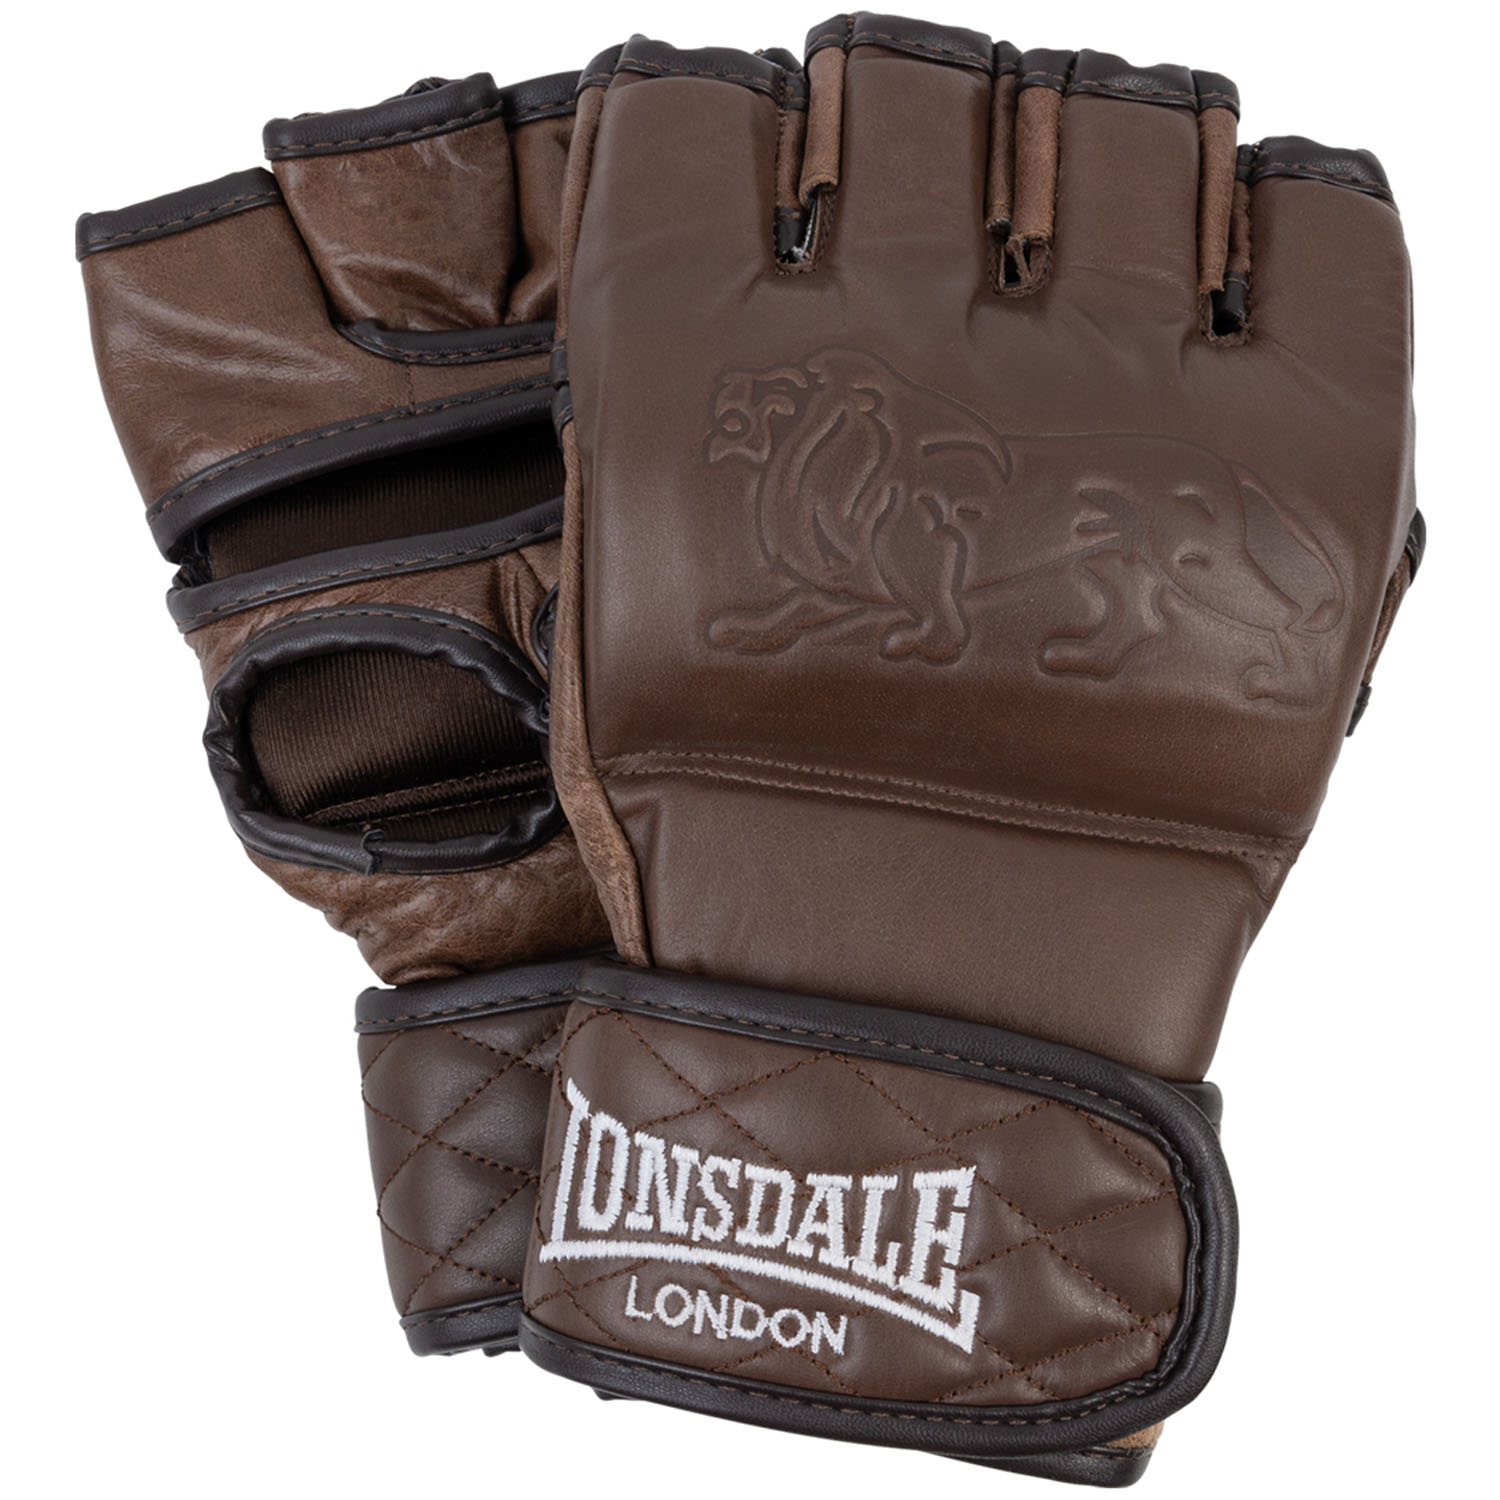 Lonsdale MMA Boxing Gloves, Vintage, brown, S/M